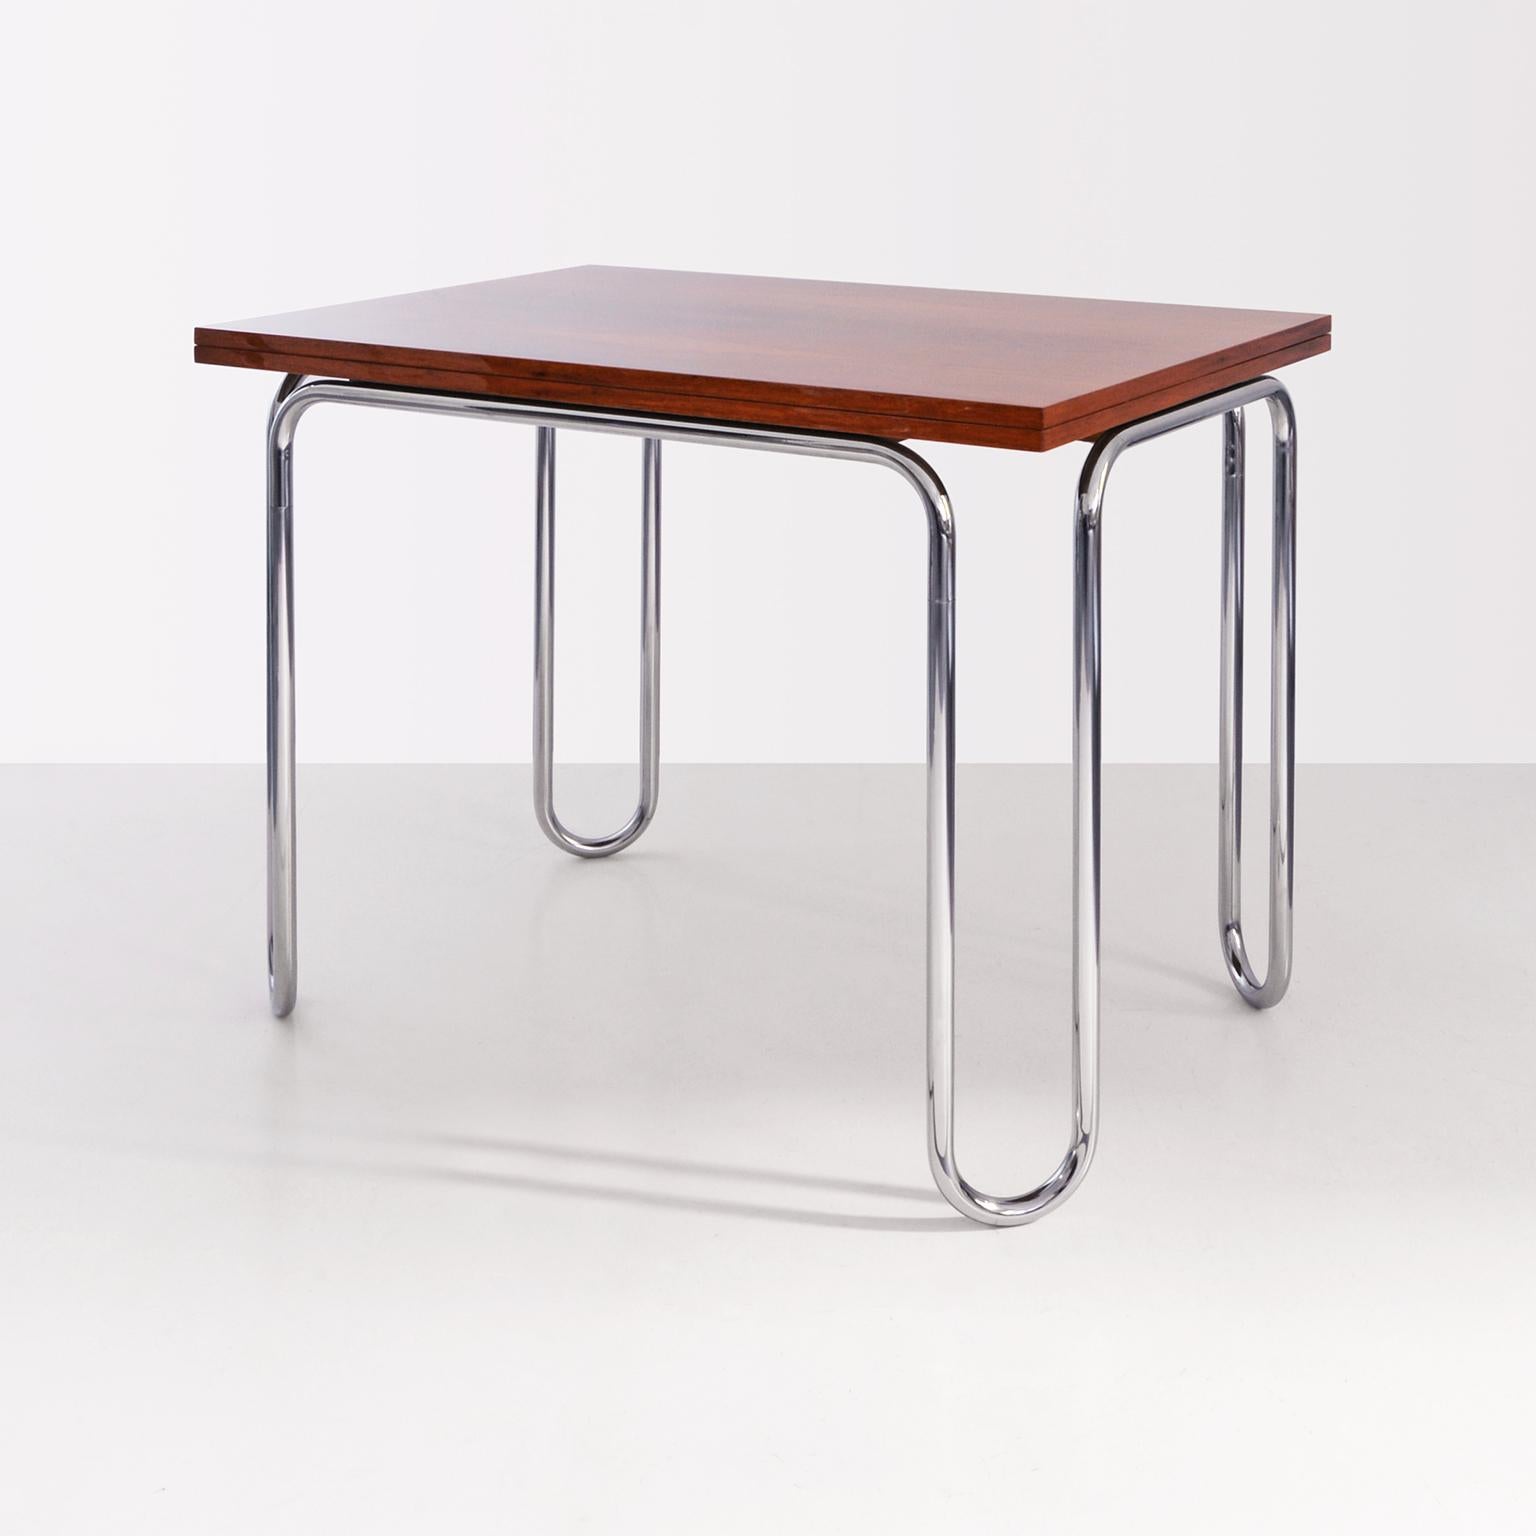 Modernist folding table made of chrome plated tubular steel and veneered wood, customizable.